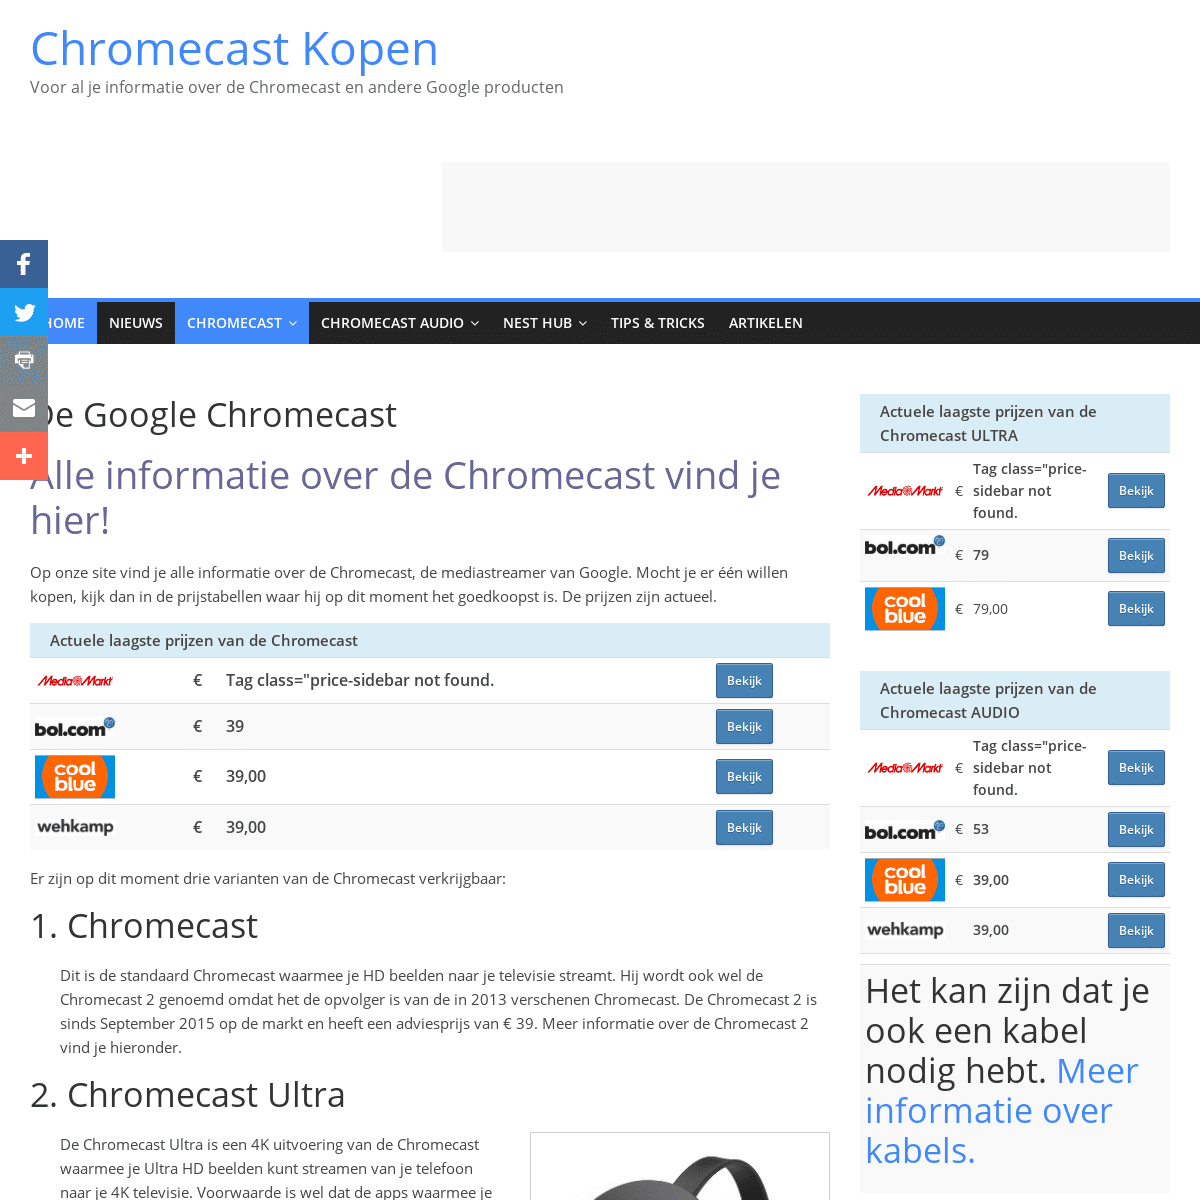 A complete backup of chromecastkopen.net